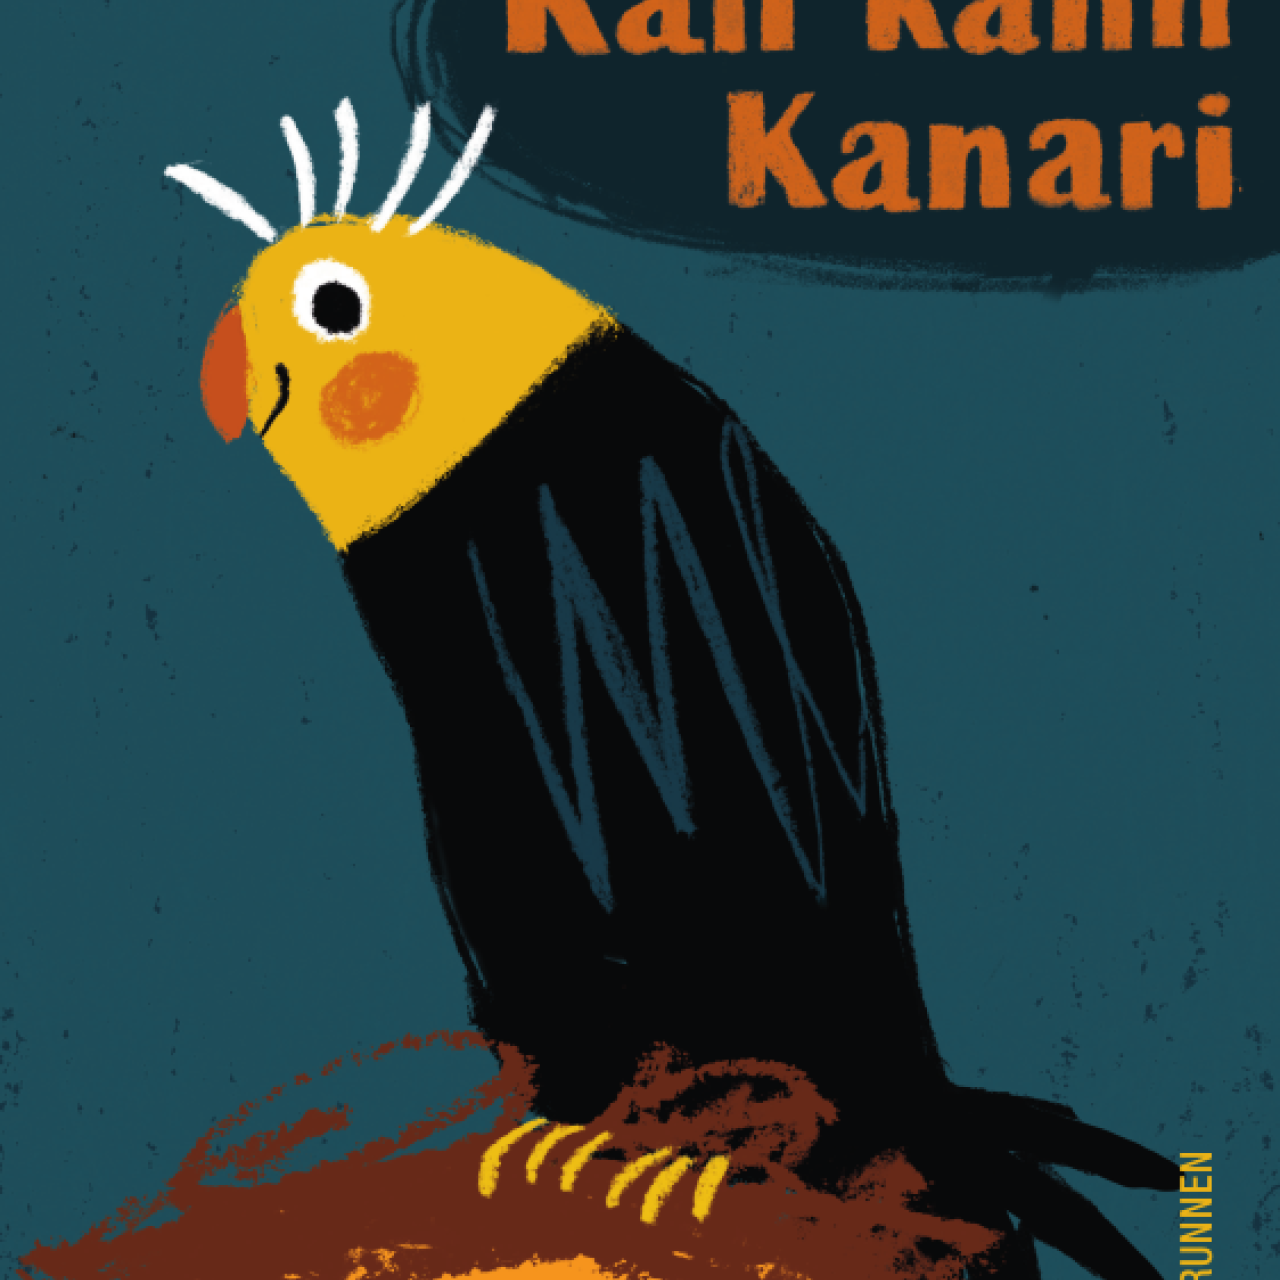 Buchcover: Kali kann Kanari - Michael Roher